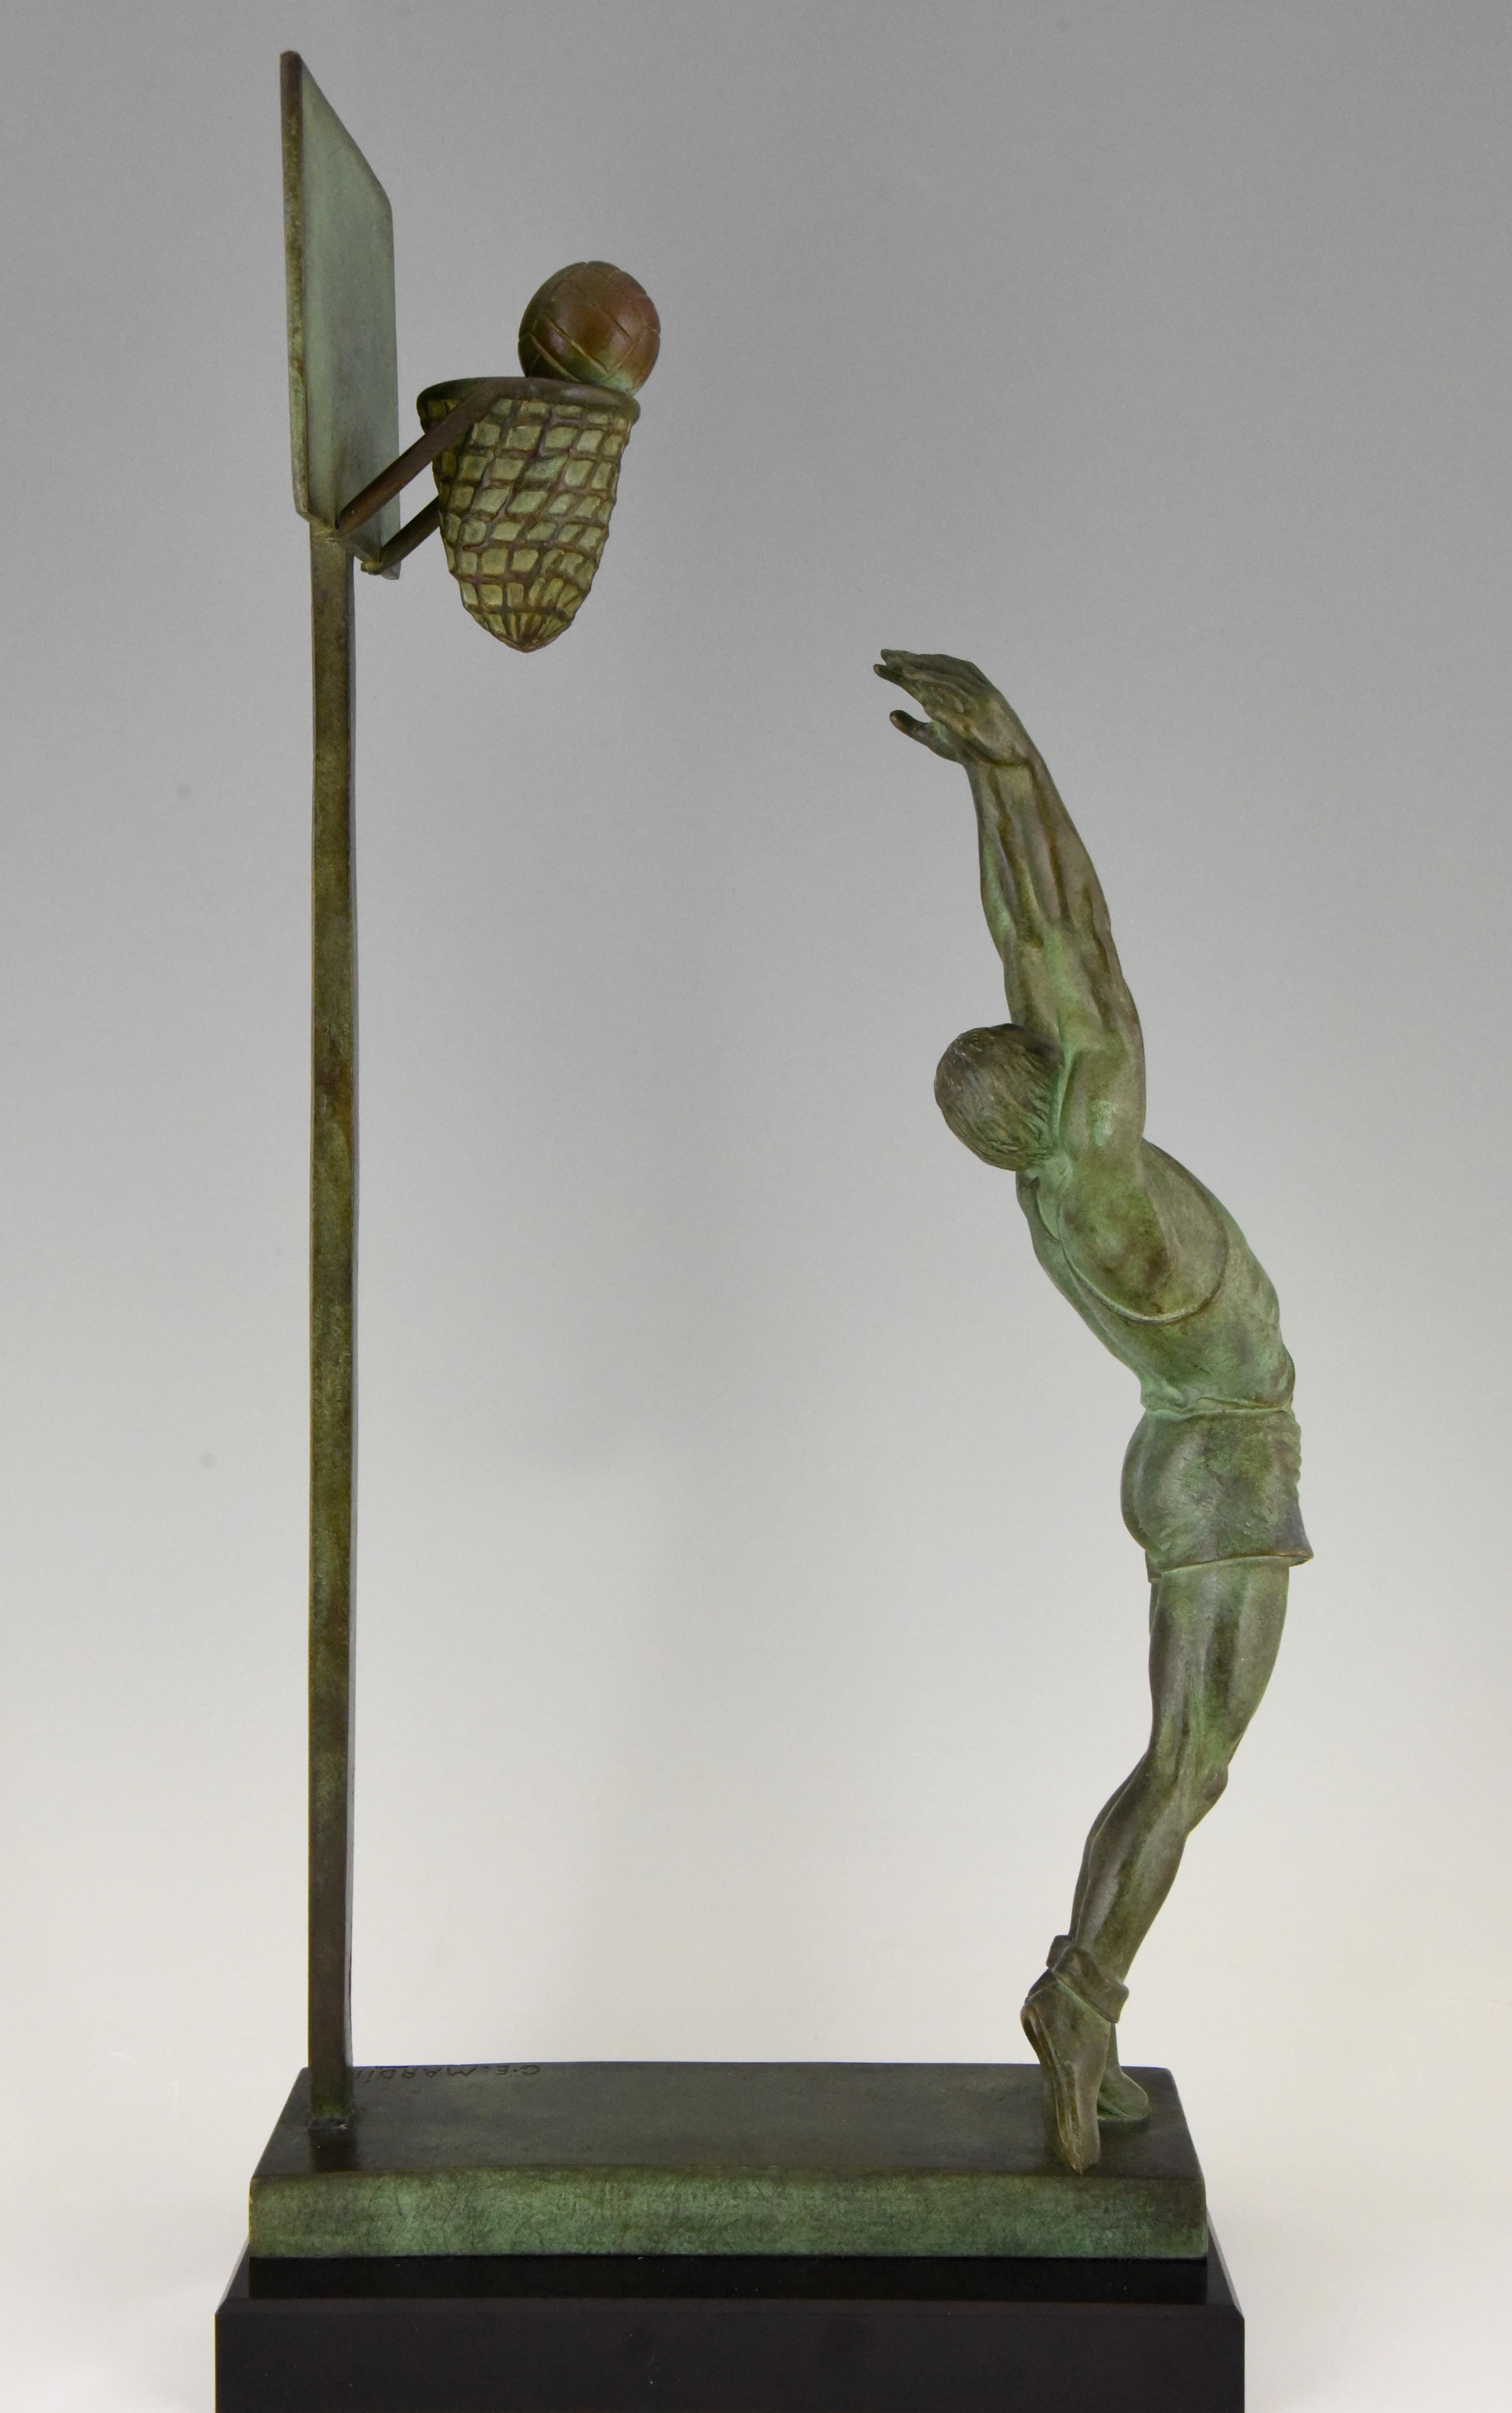 20th Century Art Deco Bronze Sculpture Basketball Player Reverse Dunk G. E. Mardini France